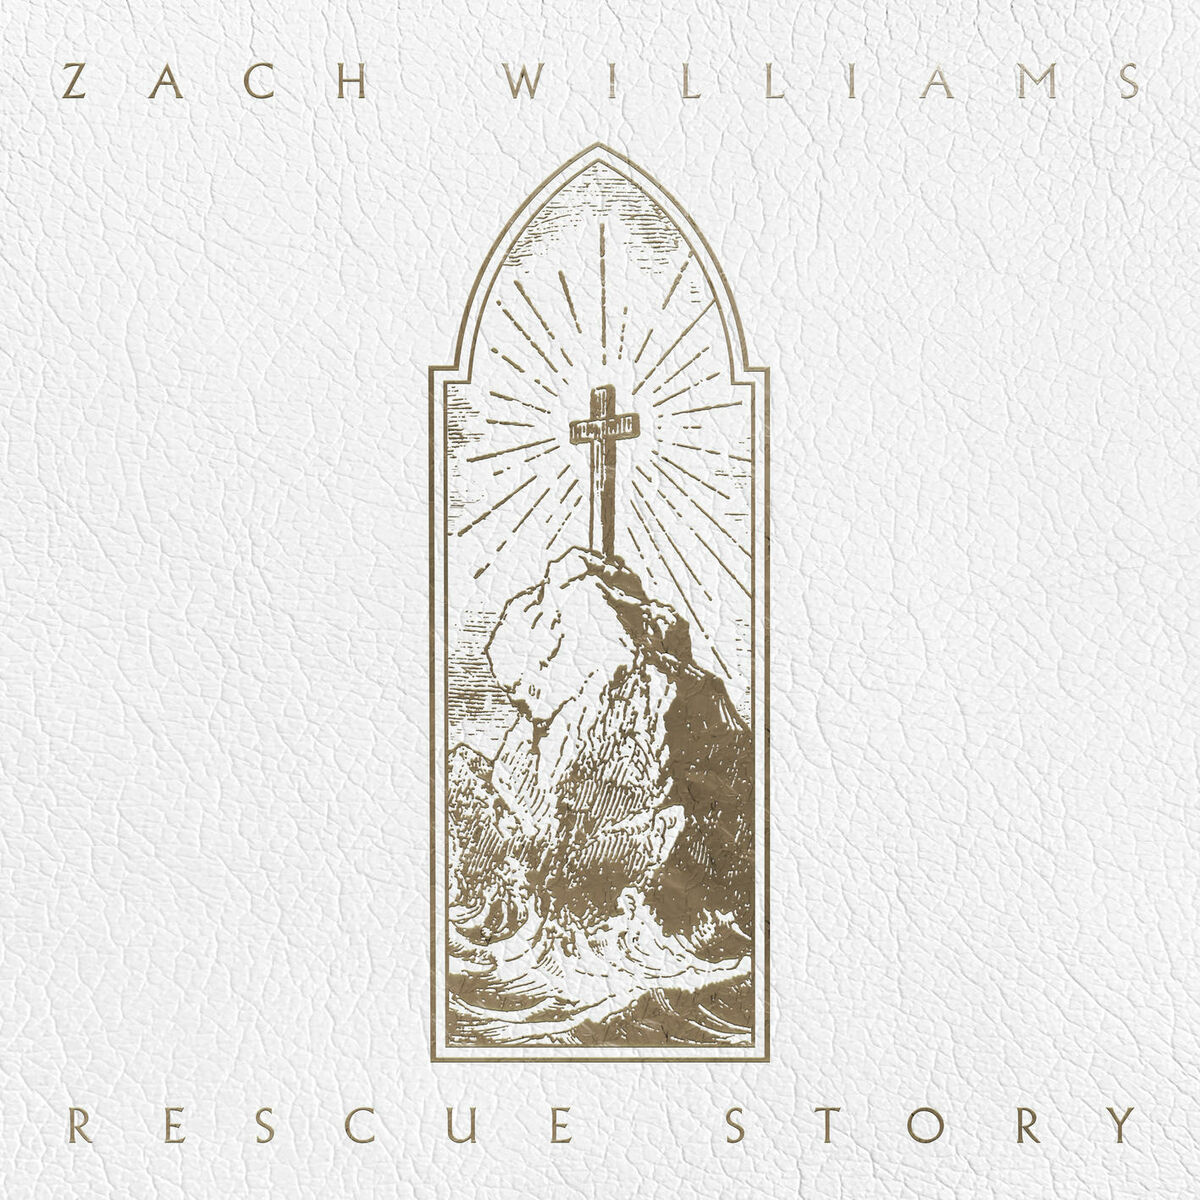 Zach Williams: albums